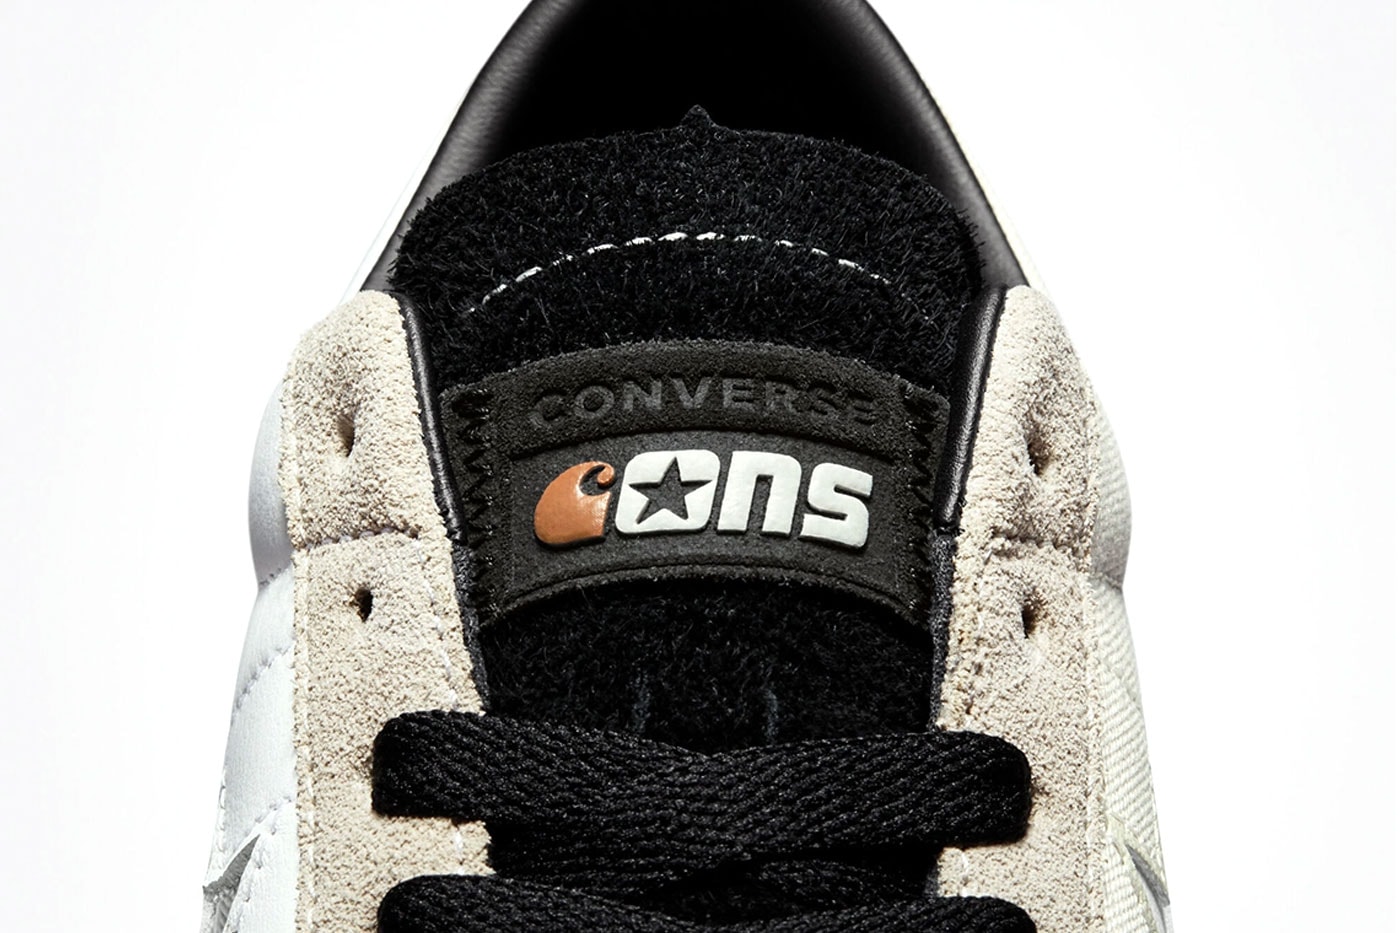 Carhartt WIP x Converse CONS 聯乘滑板鞋款正式登場